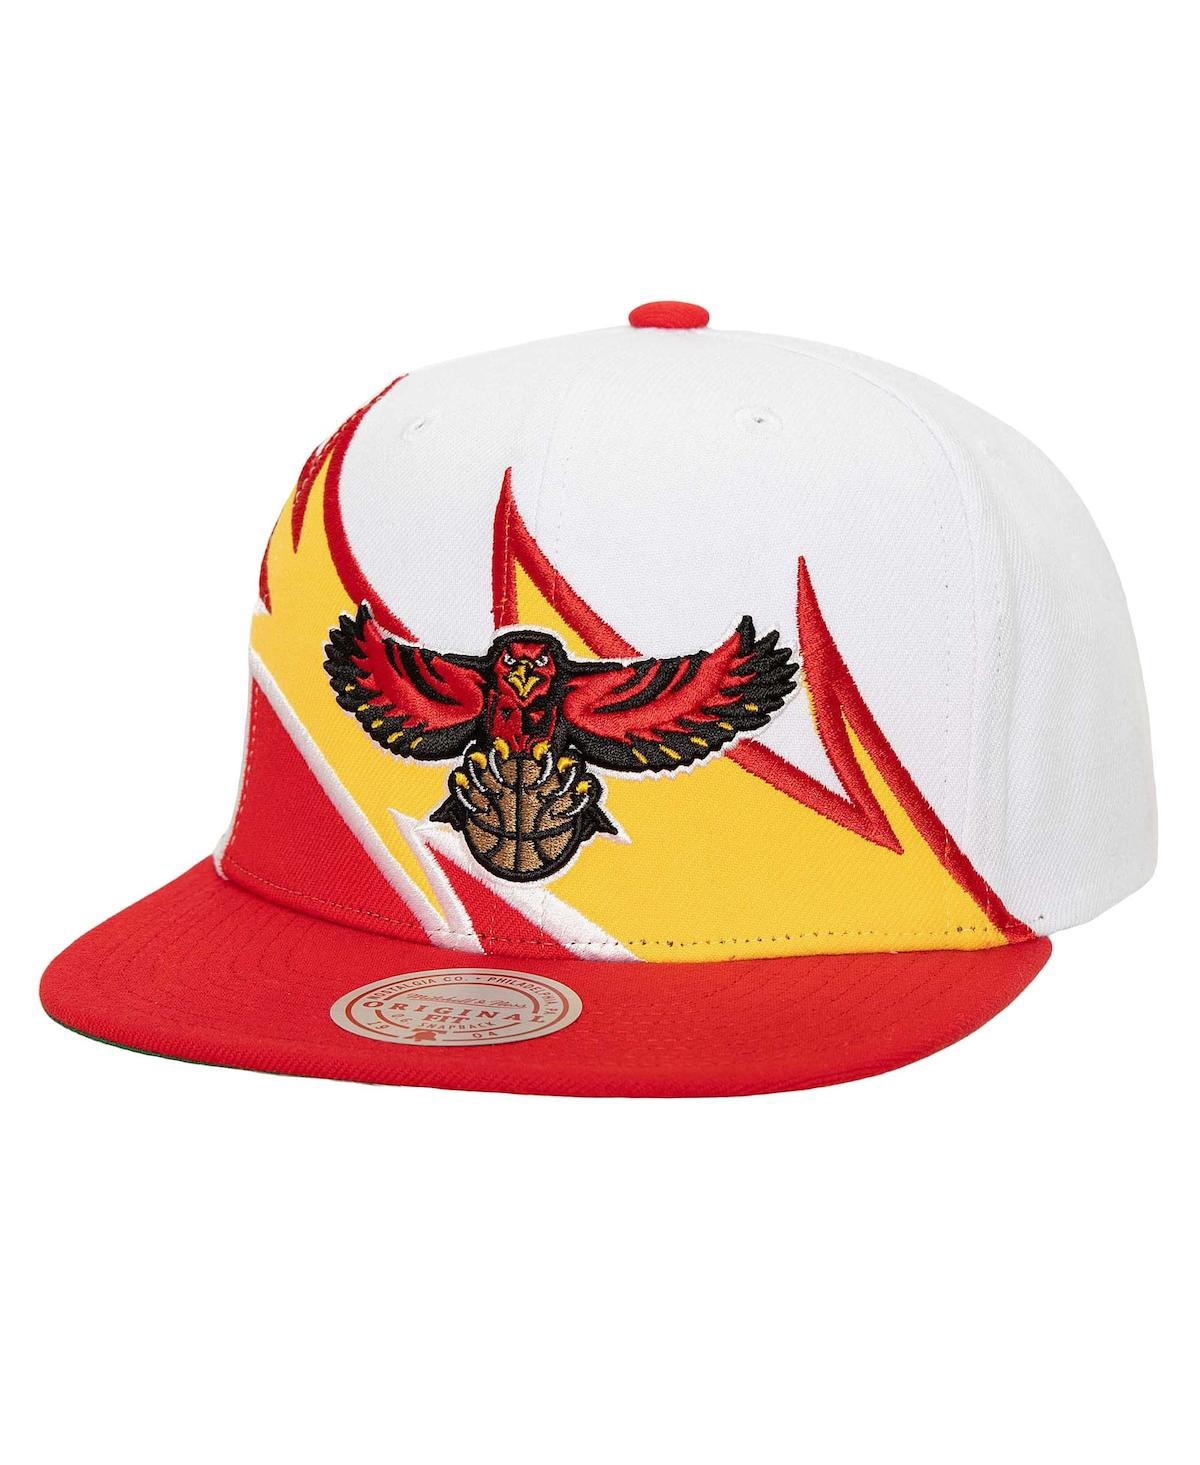 Mitchell Ness Men's White/Red Atlanta Hawks Waverunner Snapback Hat - White Red